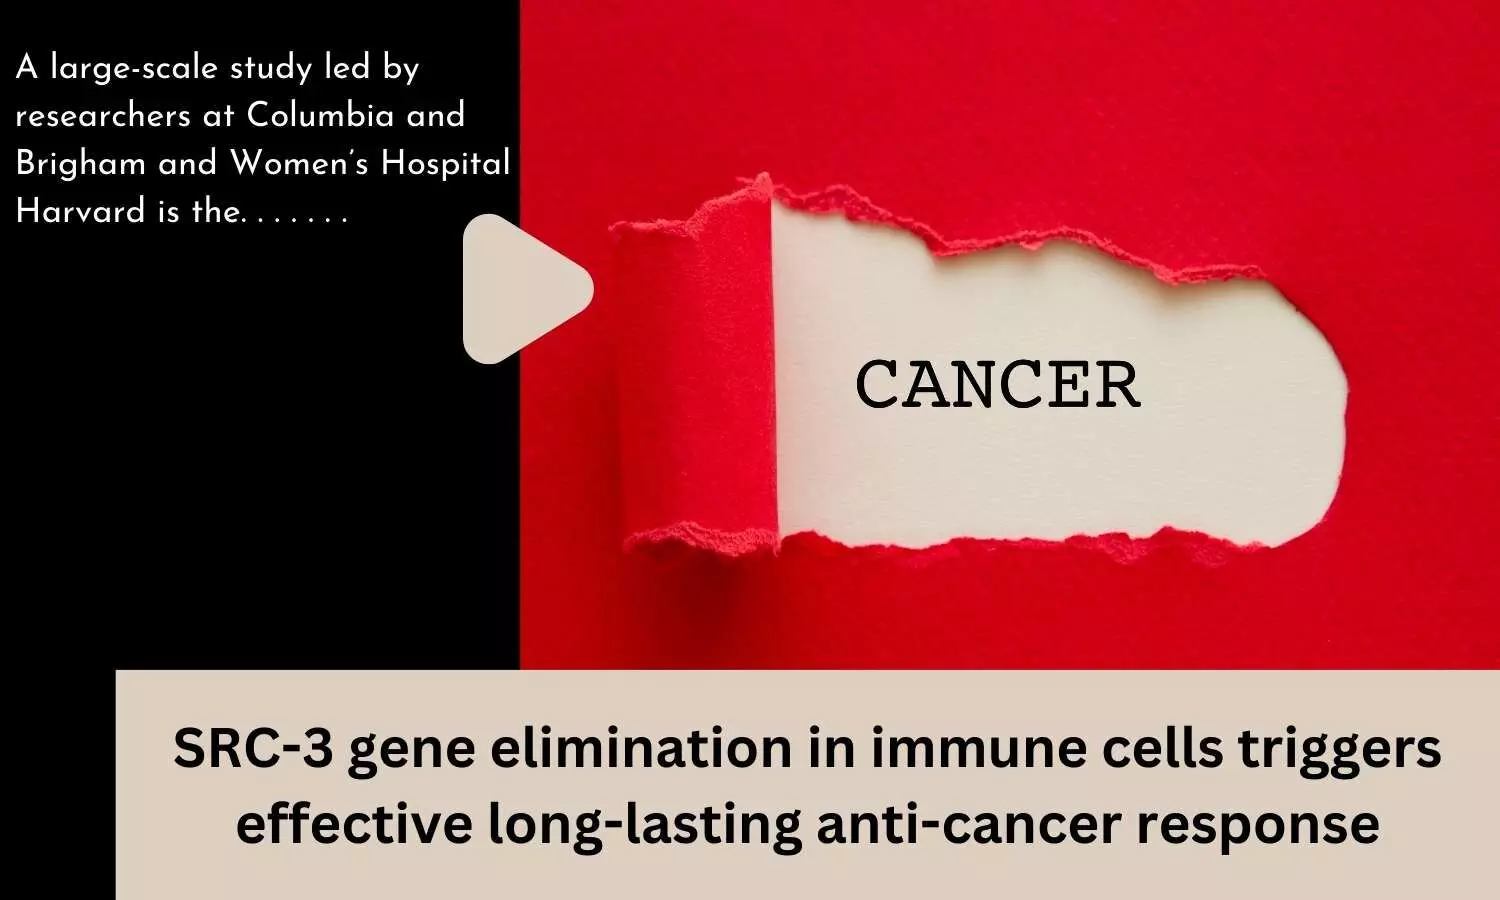 SRC-3 gene elimination in immune cells triggers effective long-lasting anti-cancer response